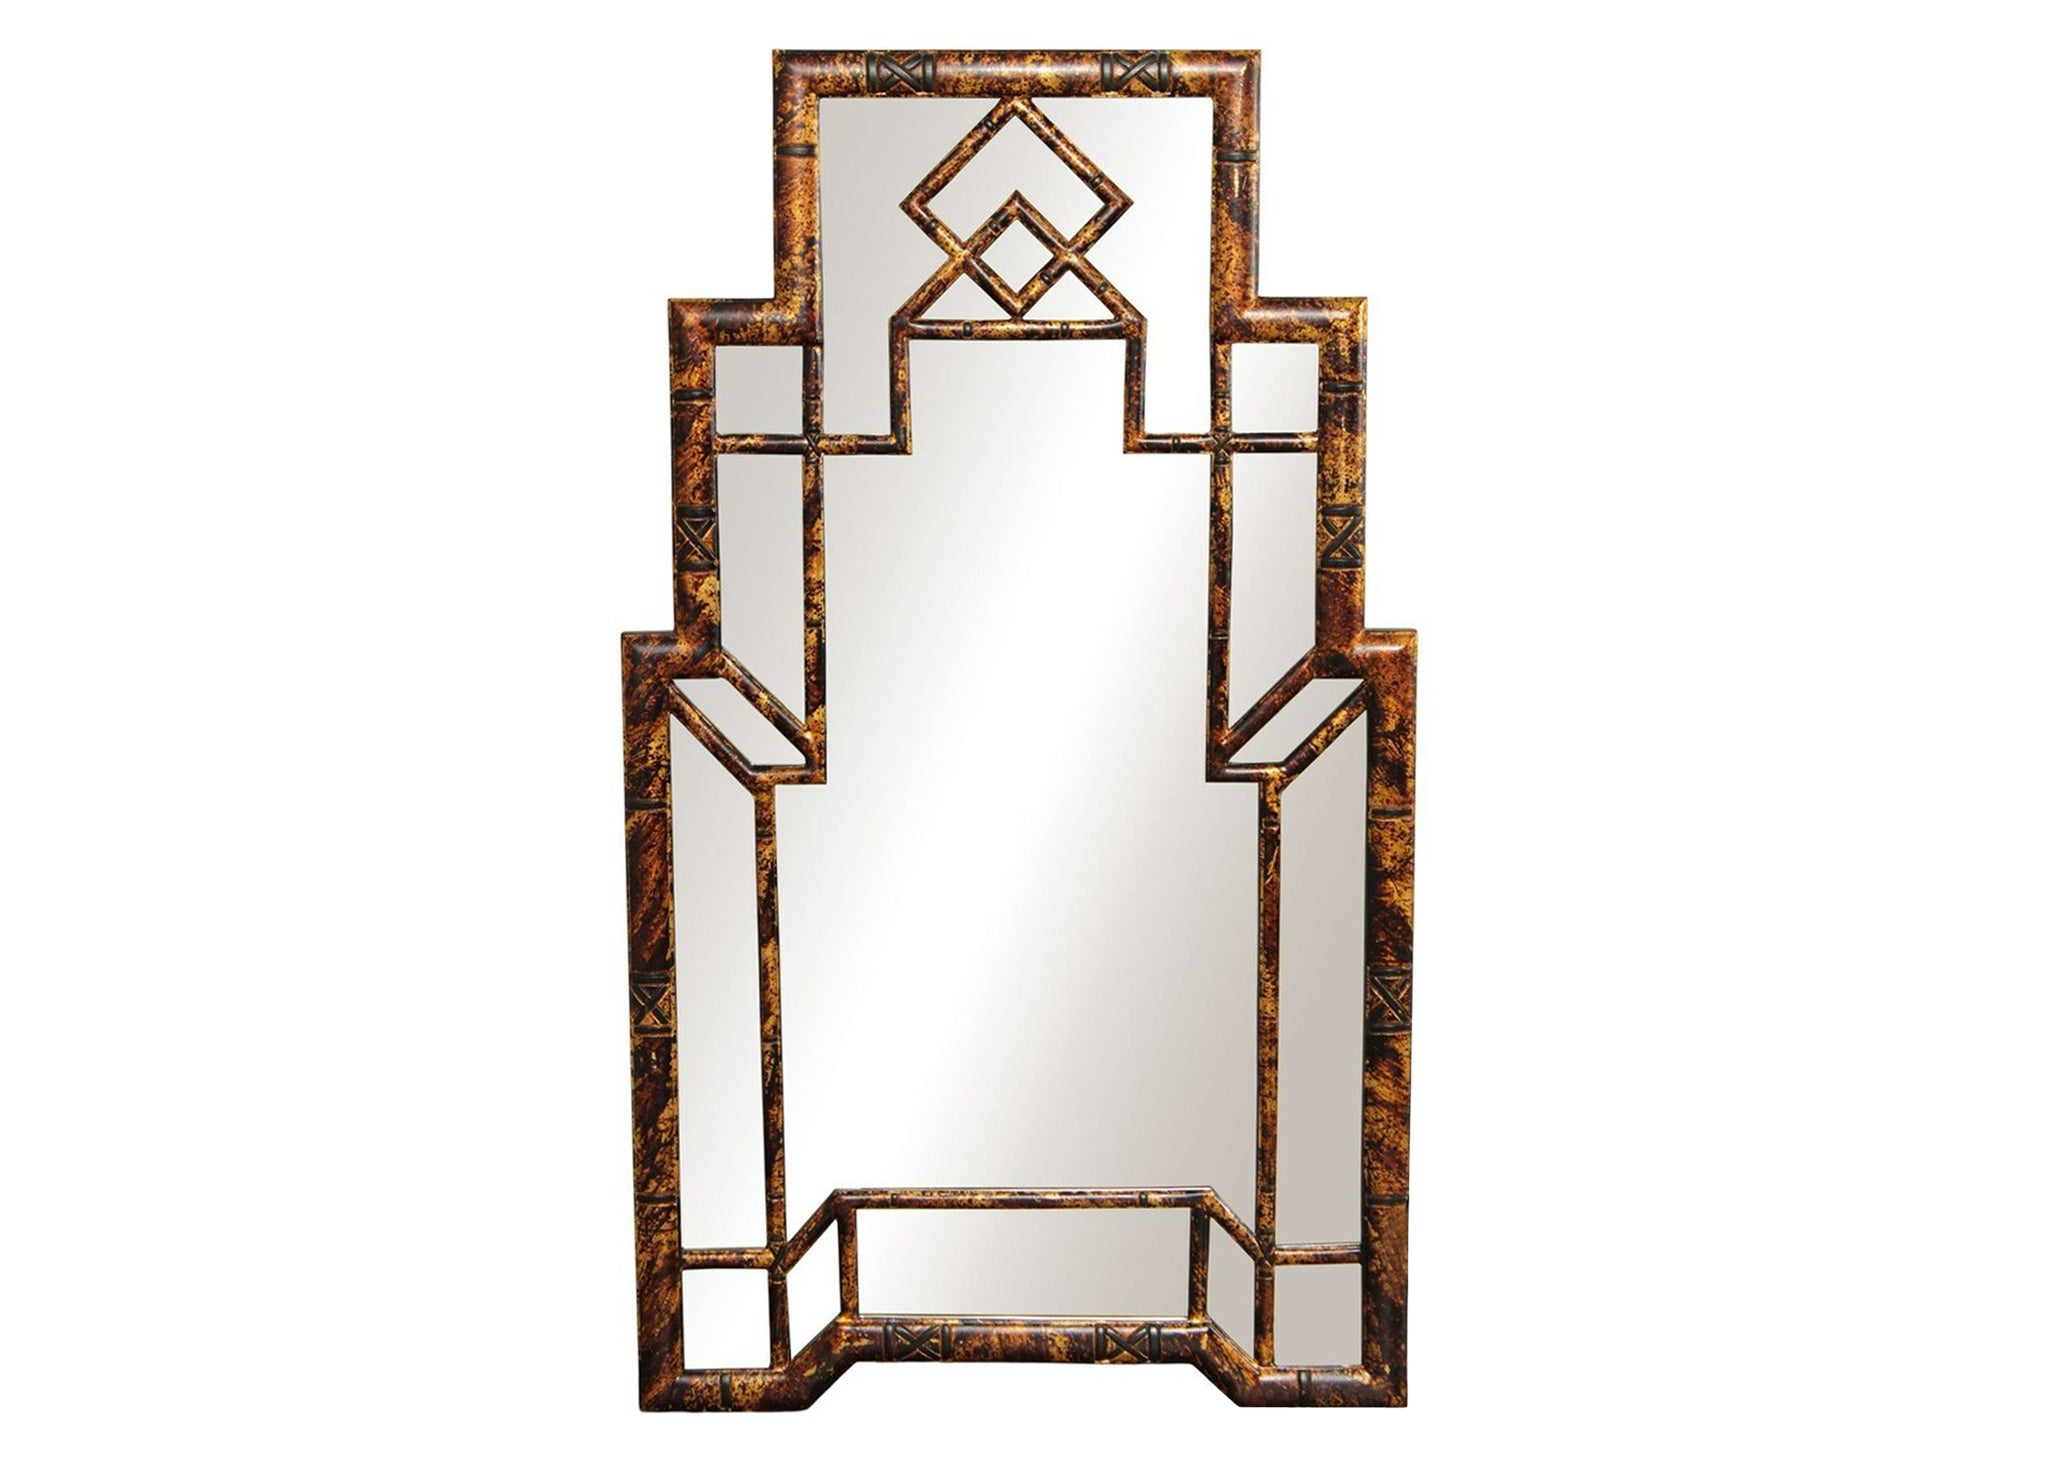 edgebrookhouse - Vintage 1970s Carol Canner Art Deco Inspired Faux Tortoiseshell Dynasty Mirror